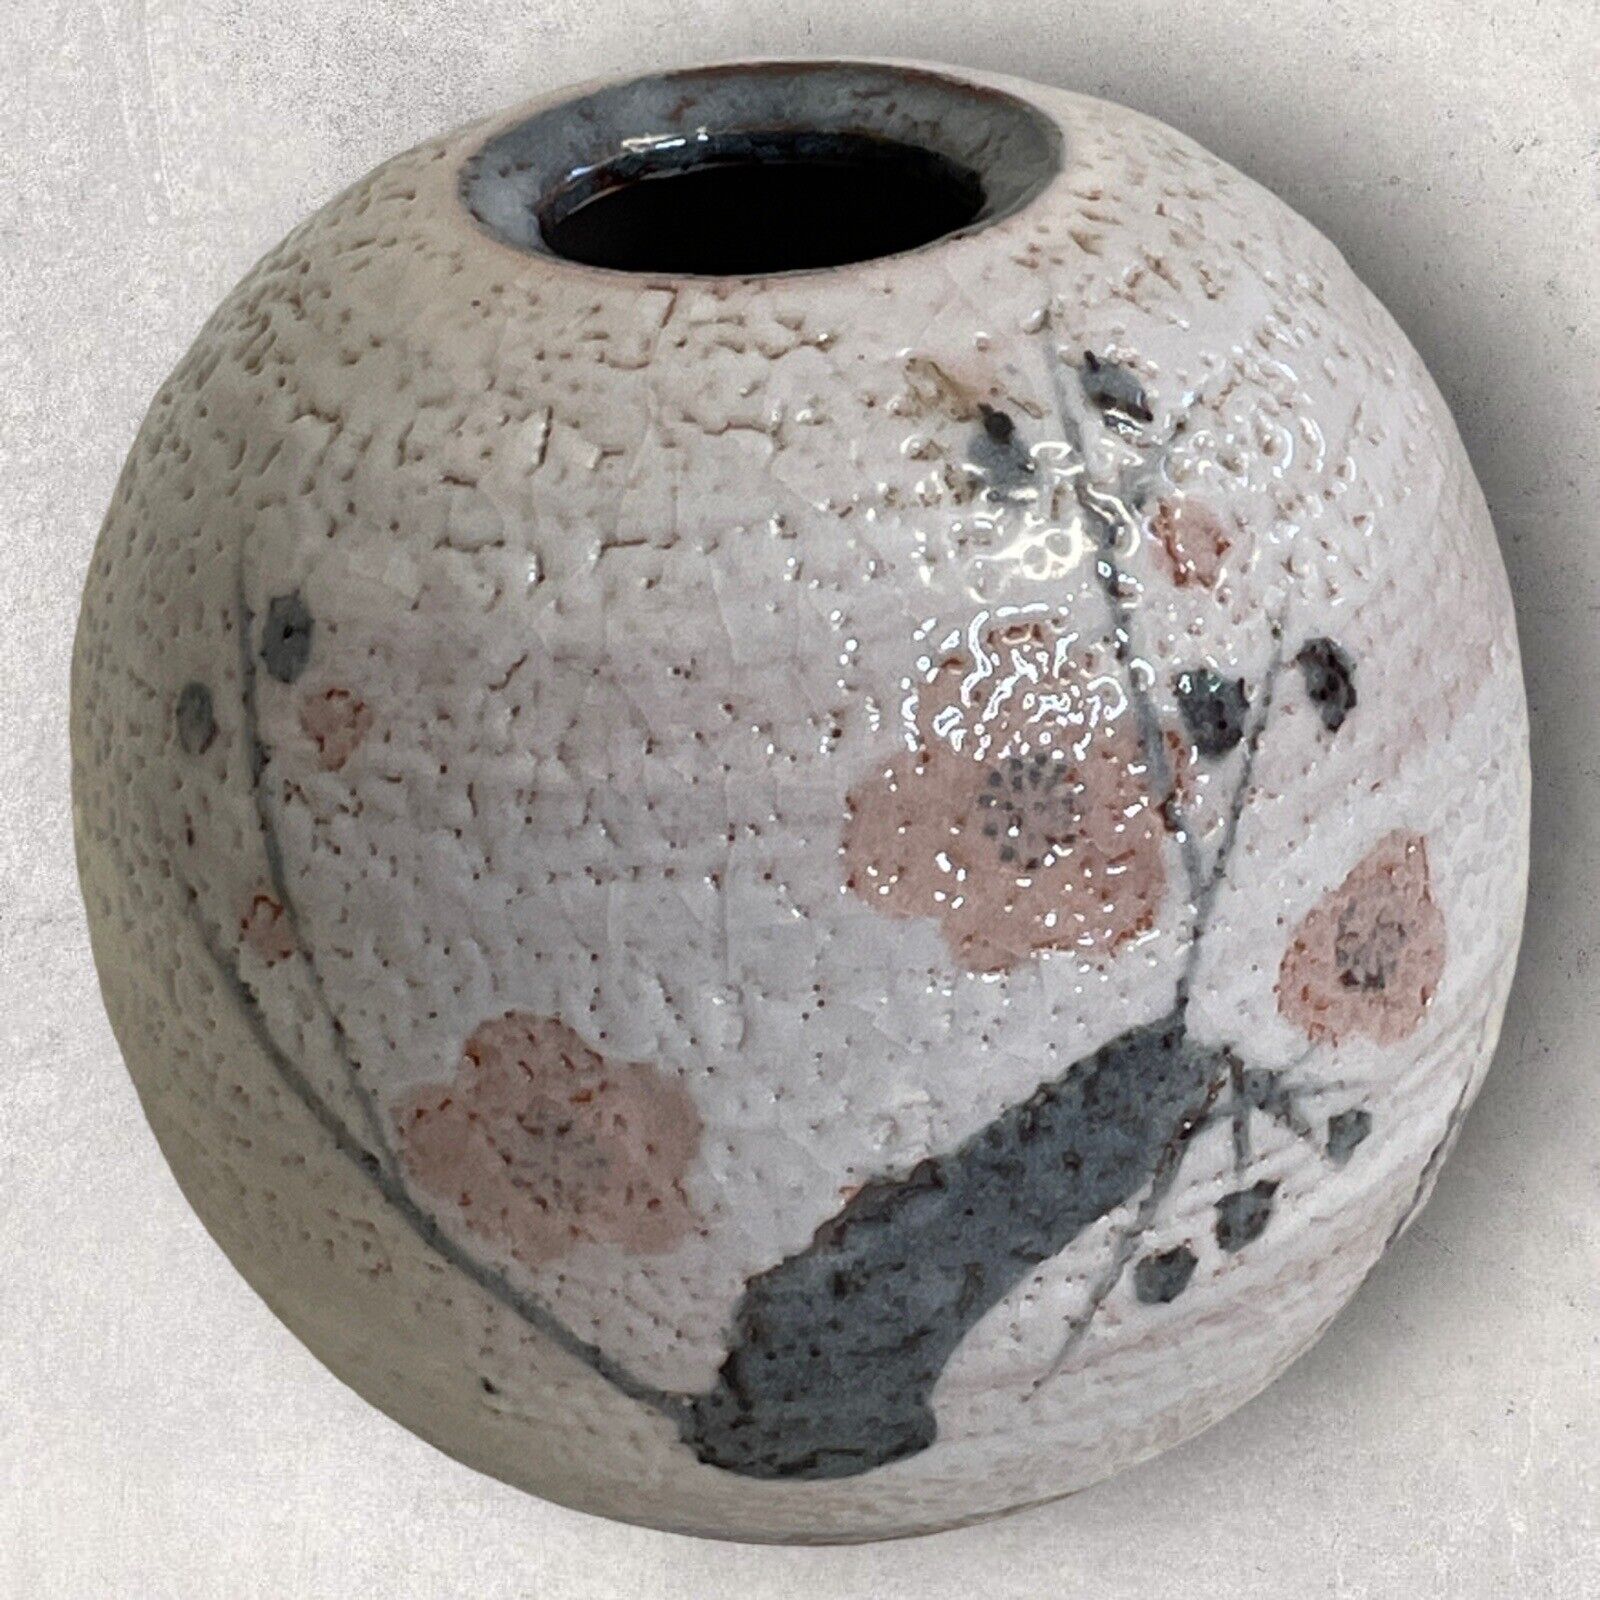 1985 Japan Shino-ware Pink Gray Floral Japanese White Glazed Pottery Vase Signed